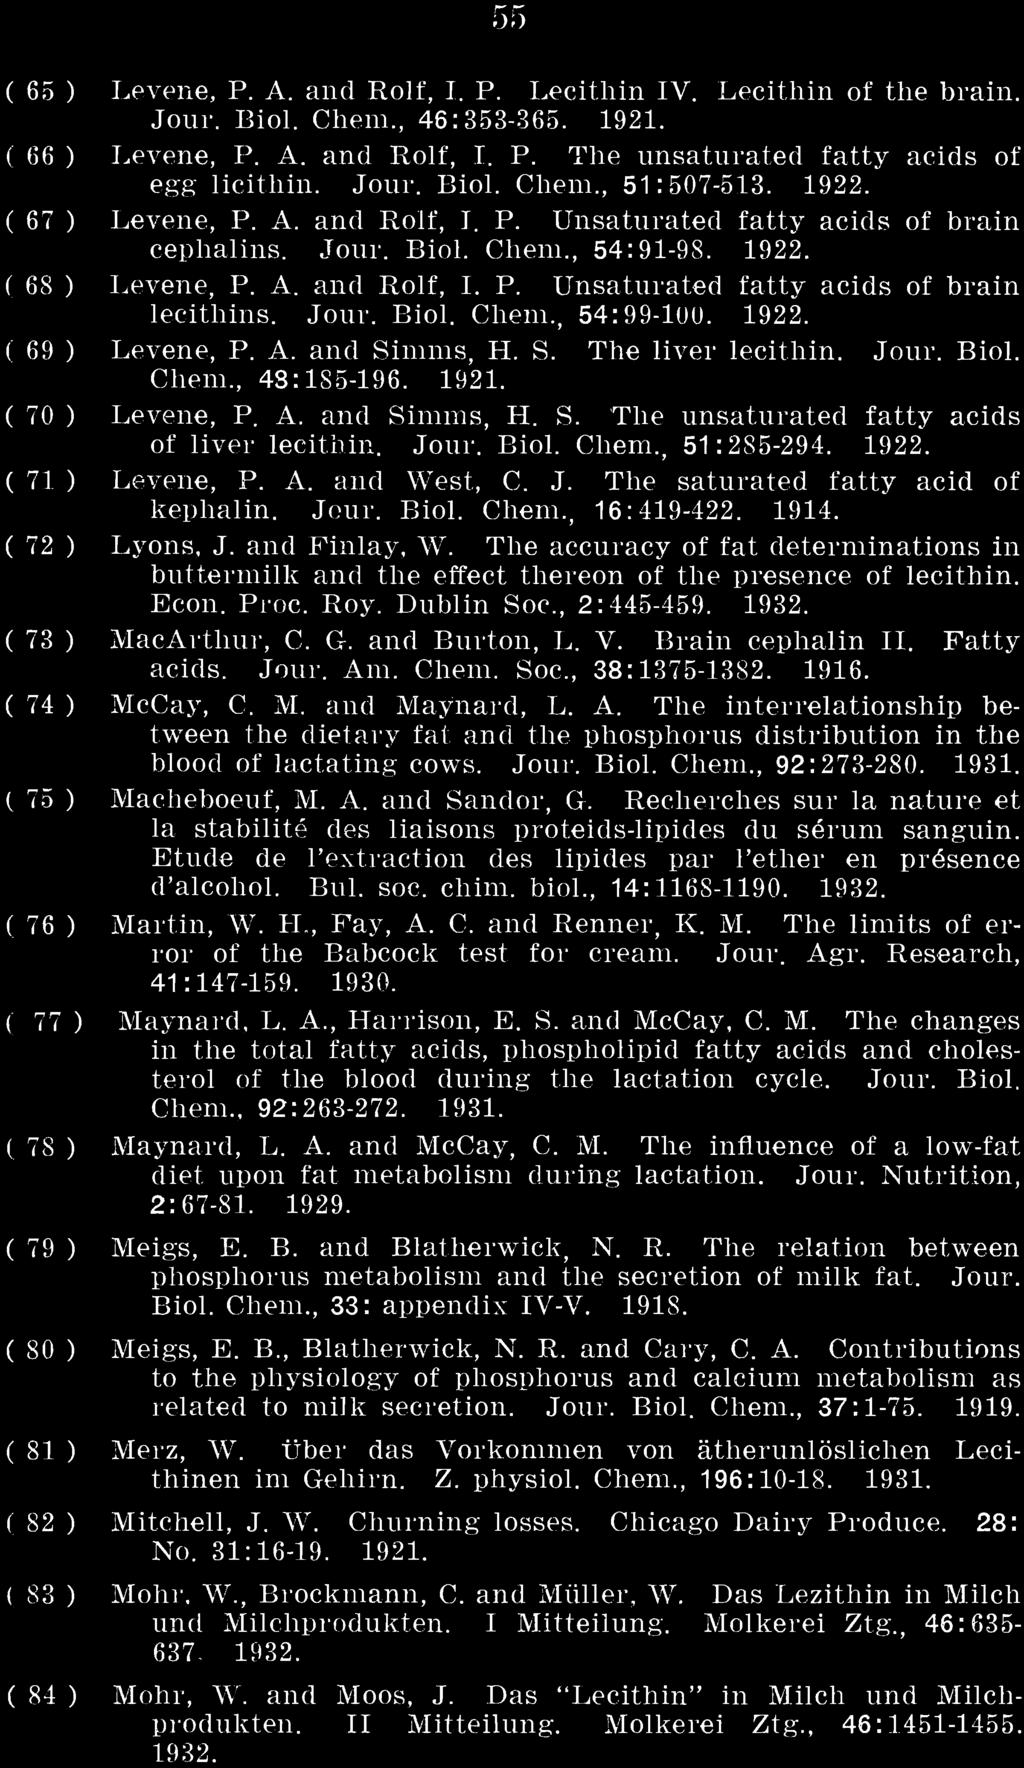 Chern., 33: appendix IV-V. 1918. ( 80) Meigs, E. B., Blatherwick, N. R. and Cary, C. A.